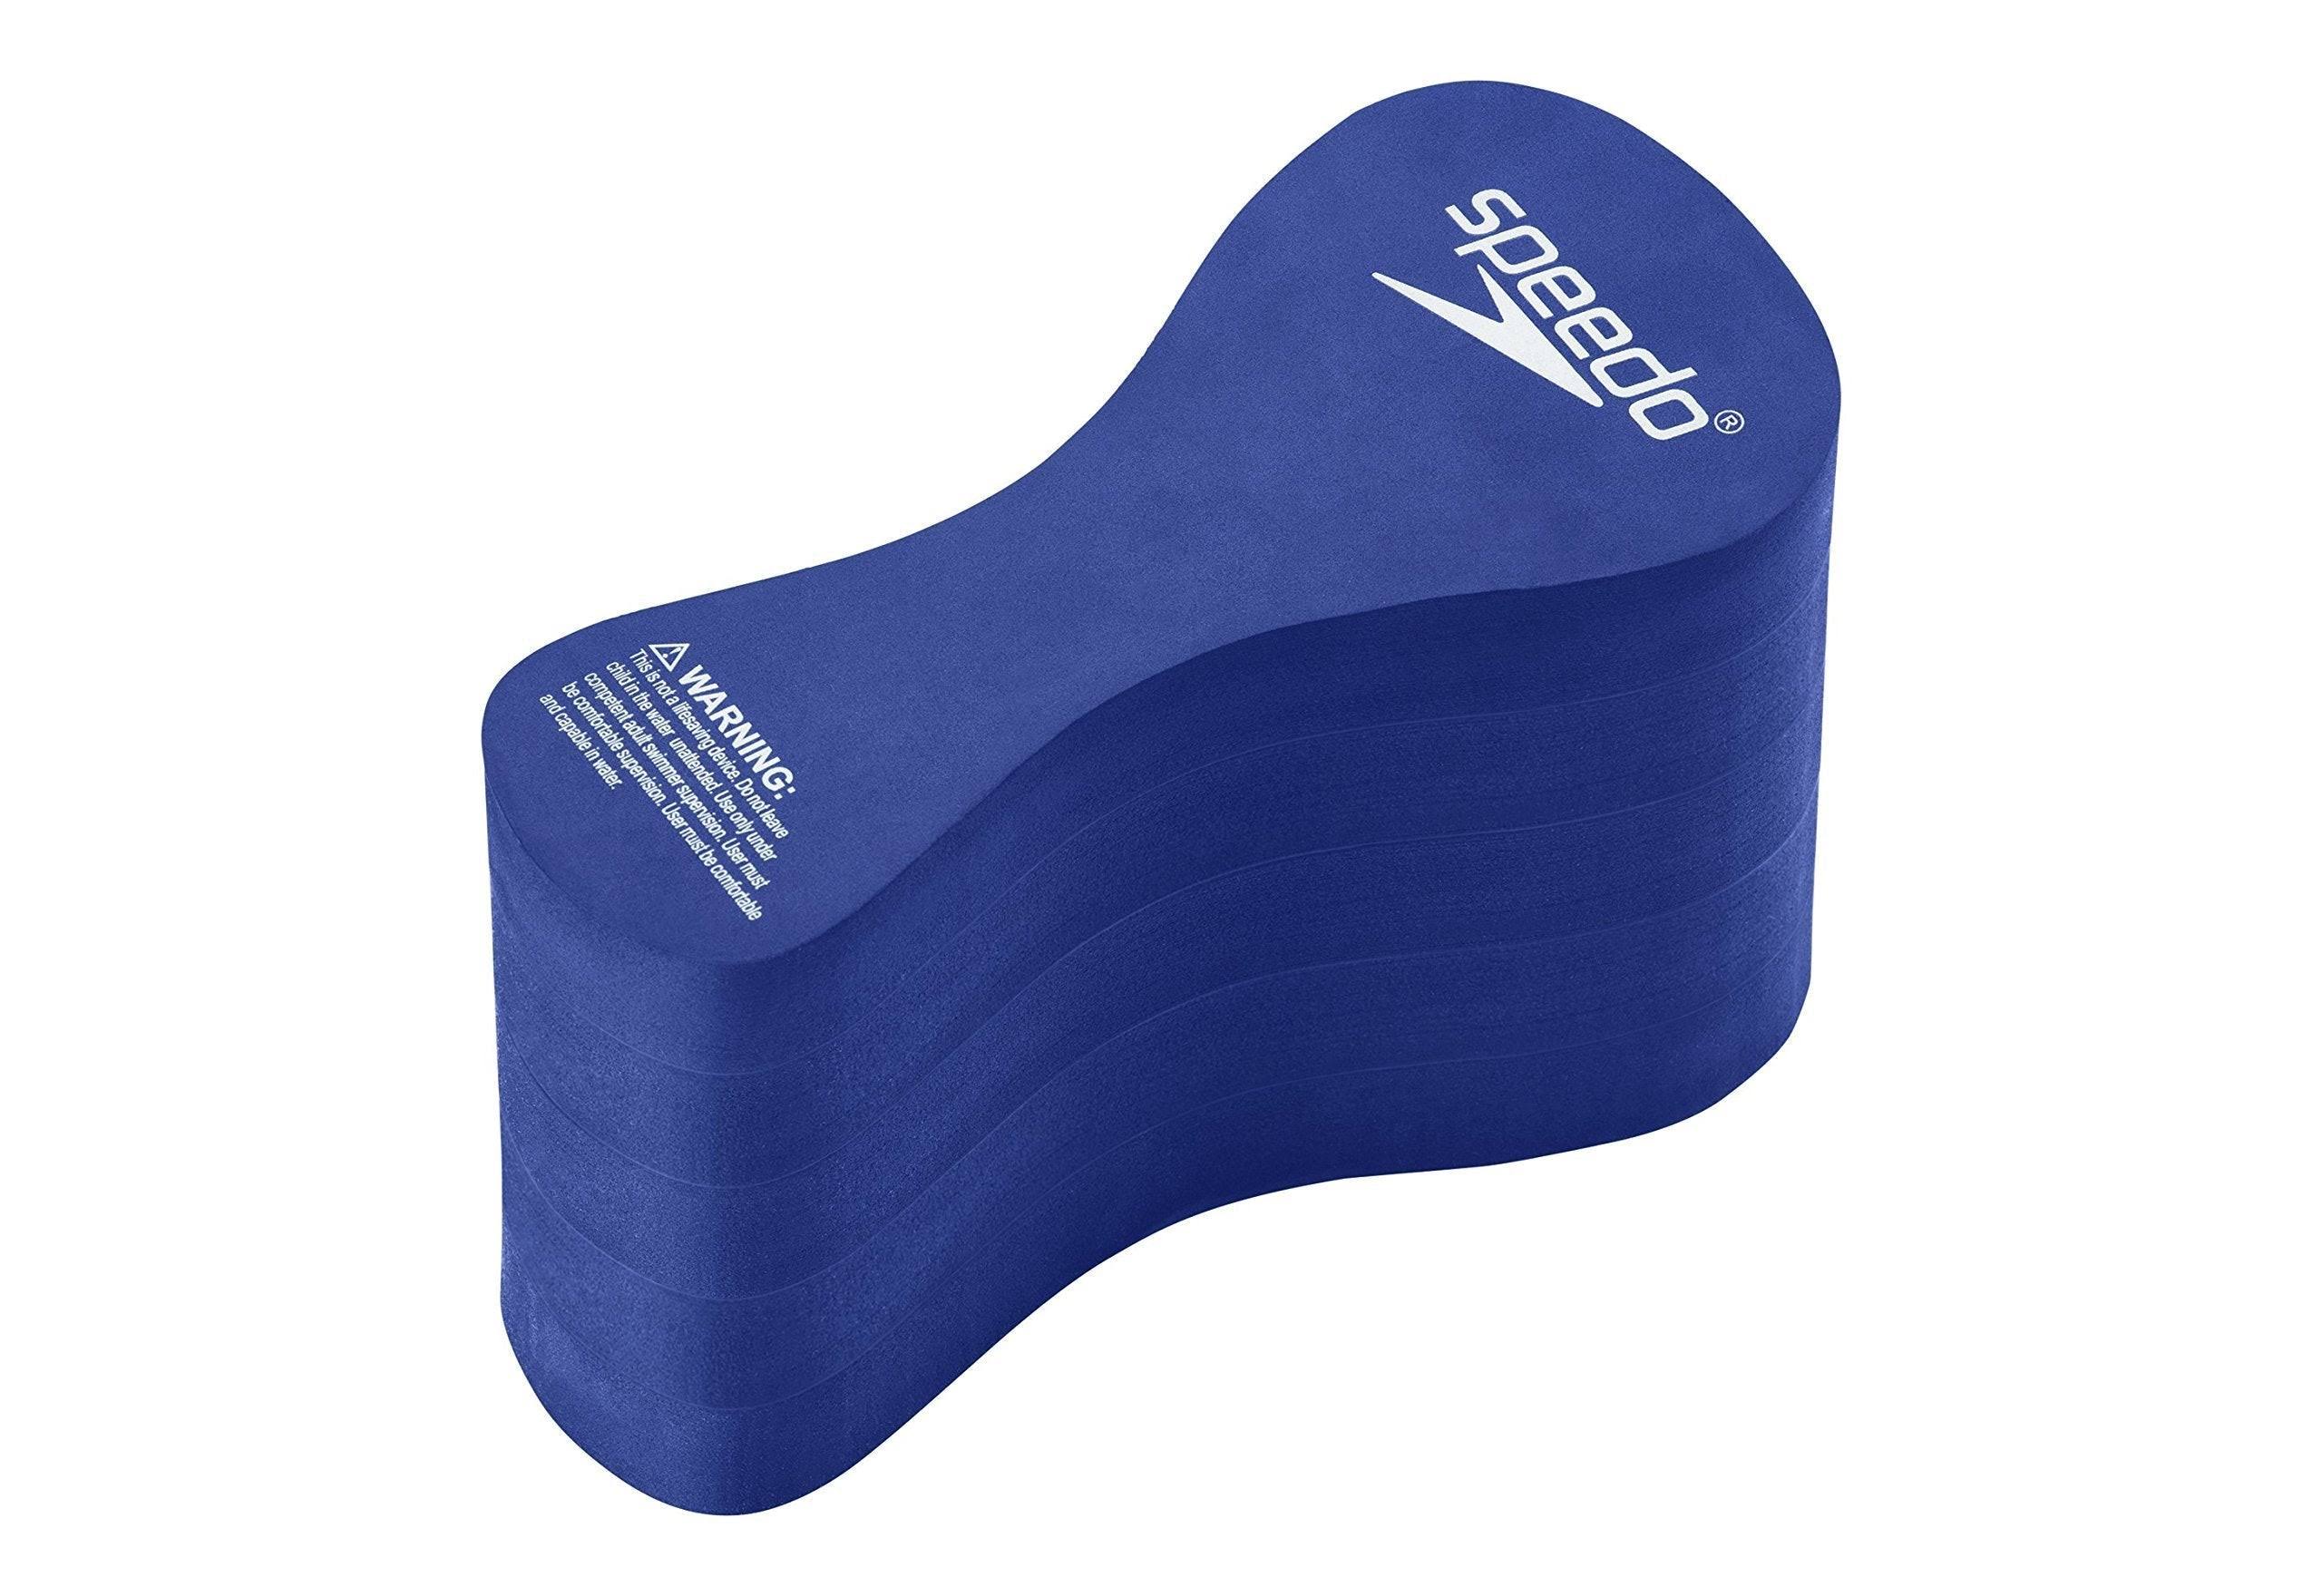 Speedo Swimming Foam Pull Buoy Training Exercise Aid - Blue